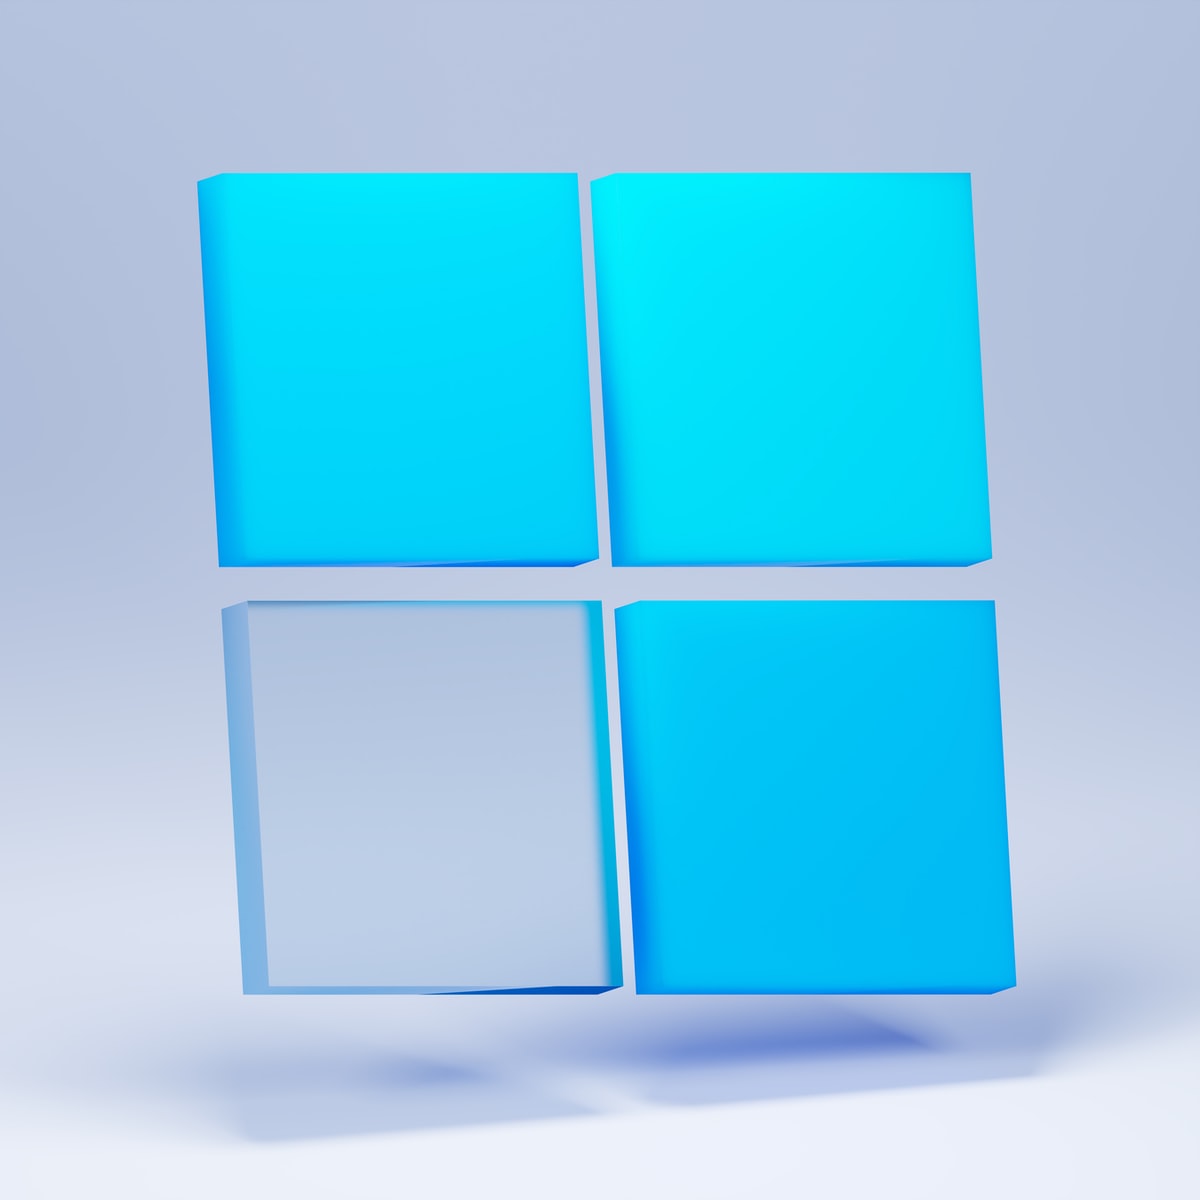 How to update Minecraft on Windows 11